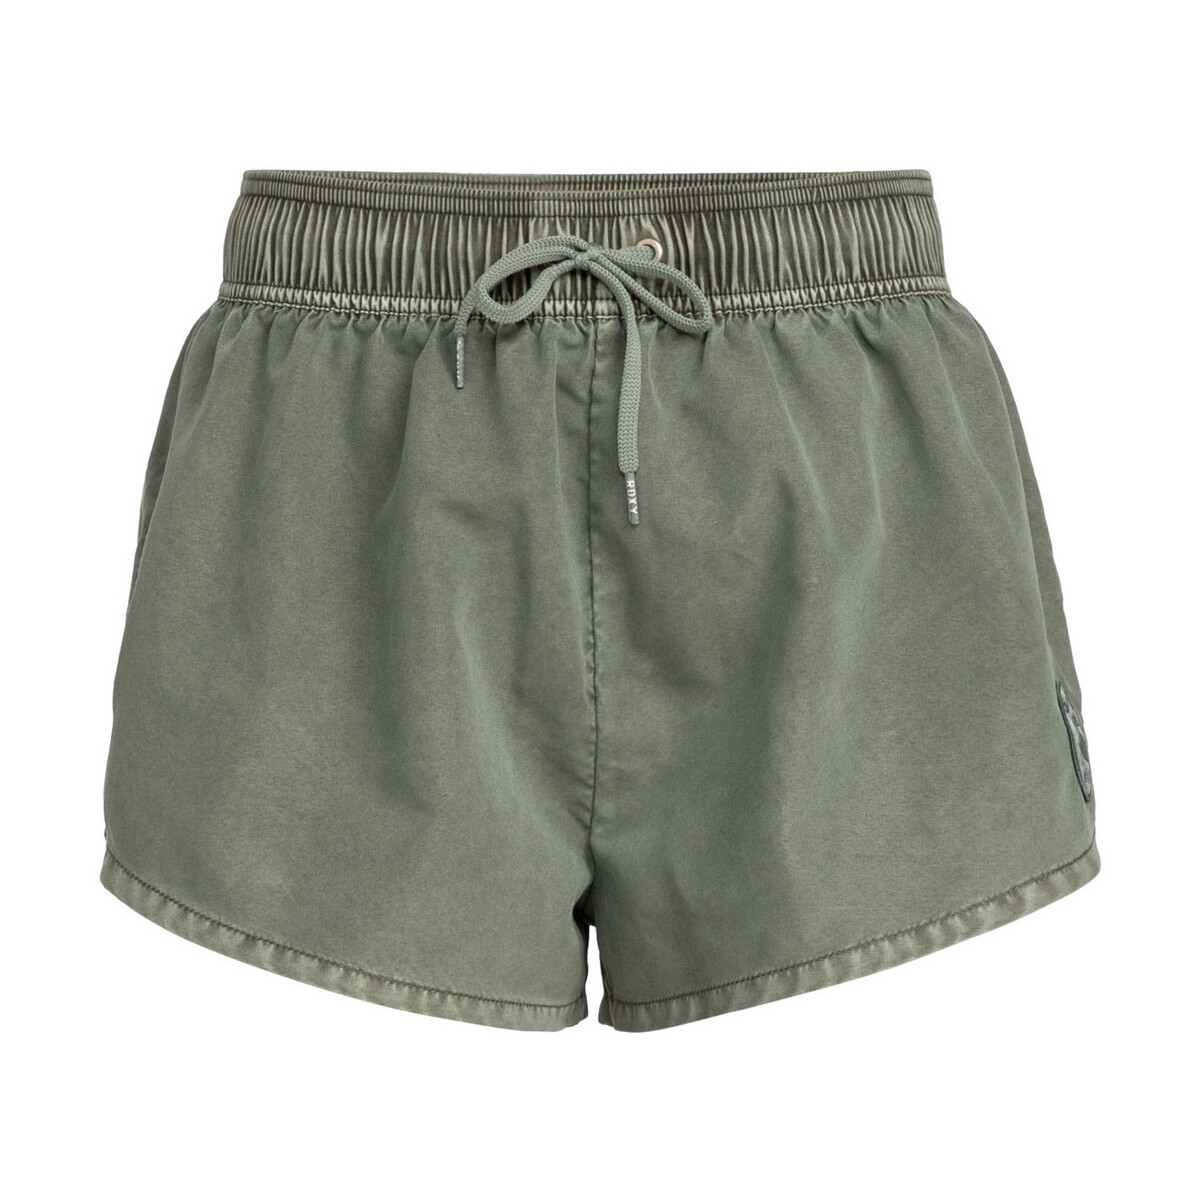 Vêtements Fille Shorts / Bermudas Roxy No Bad Waves Vert